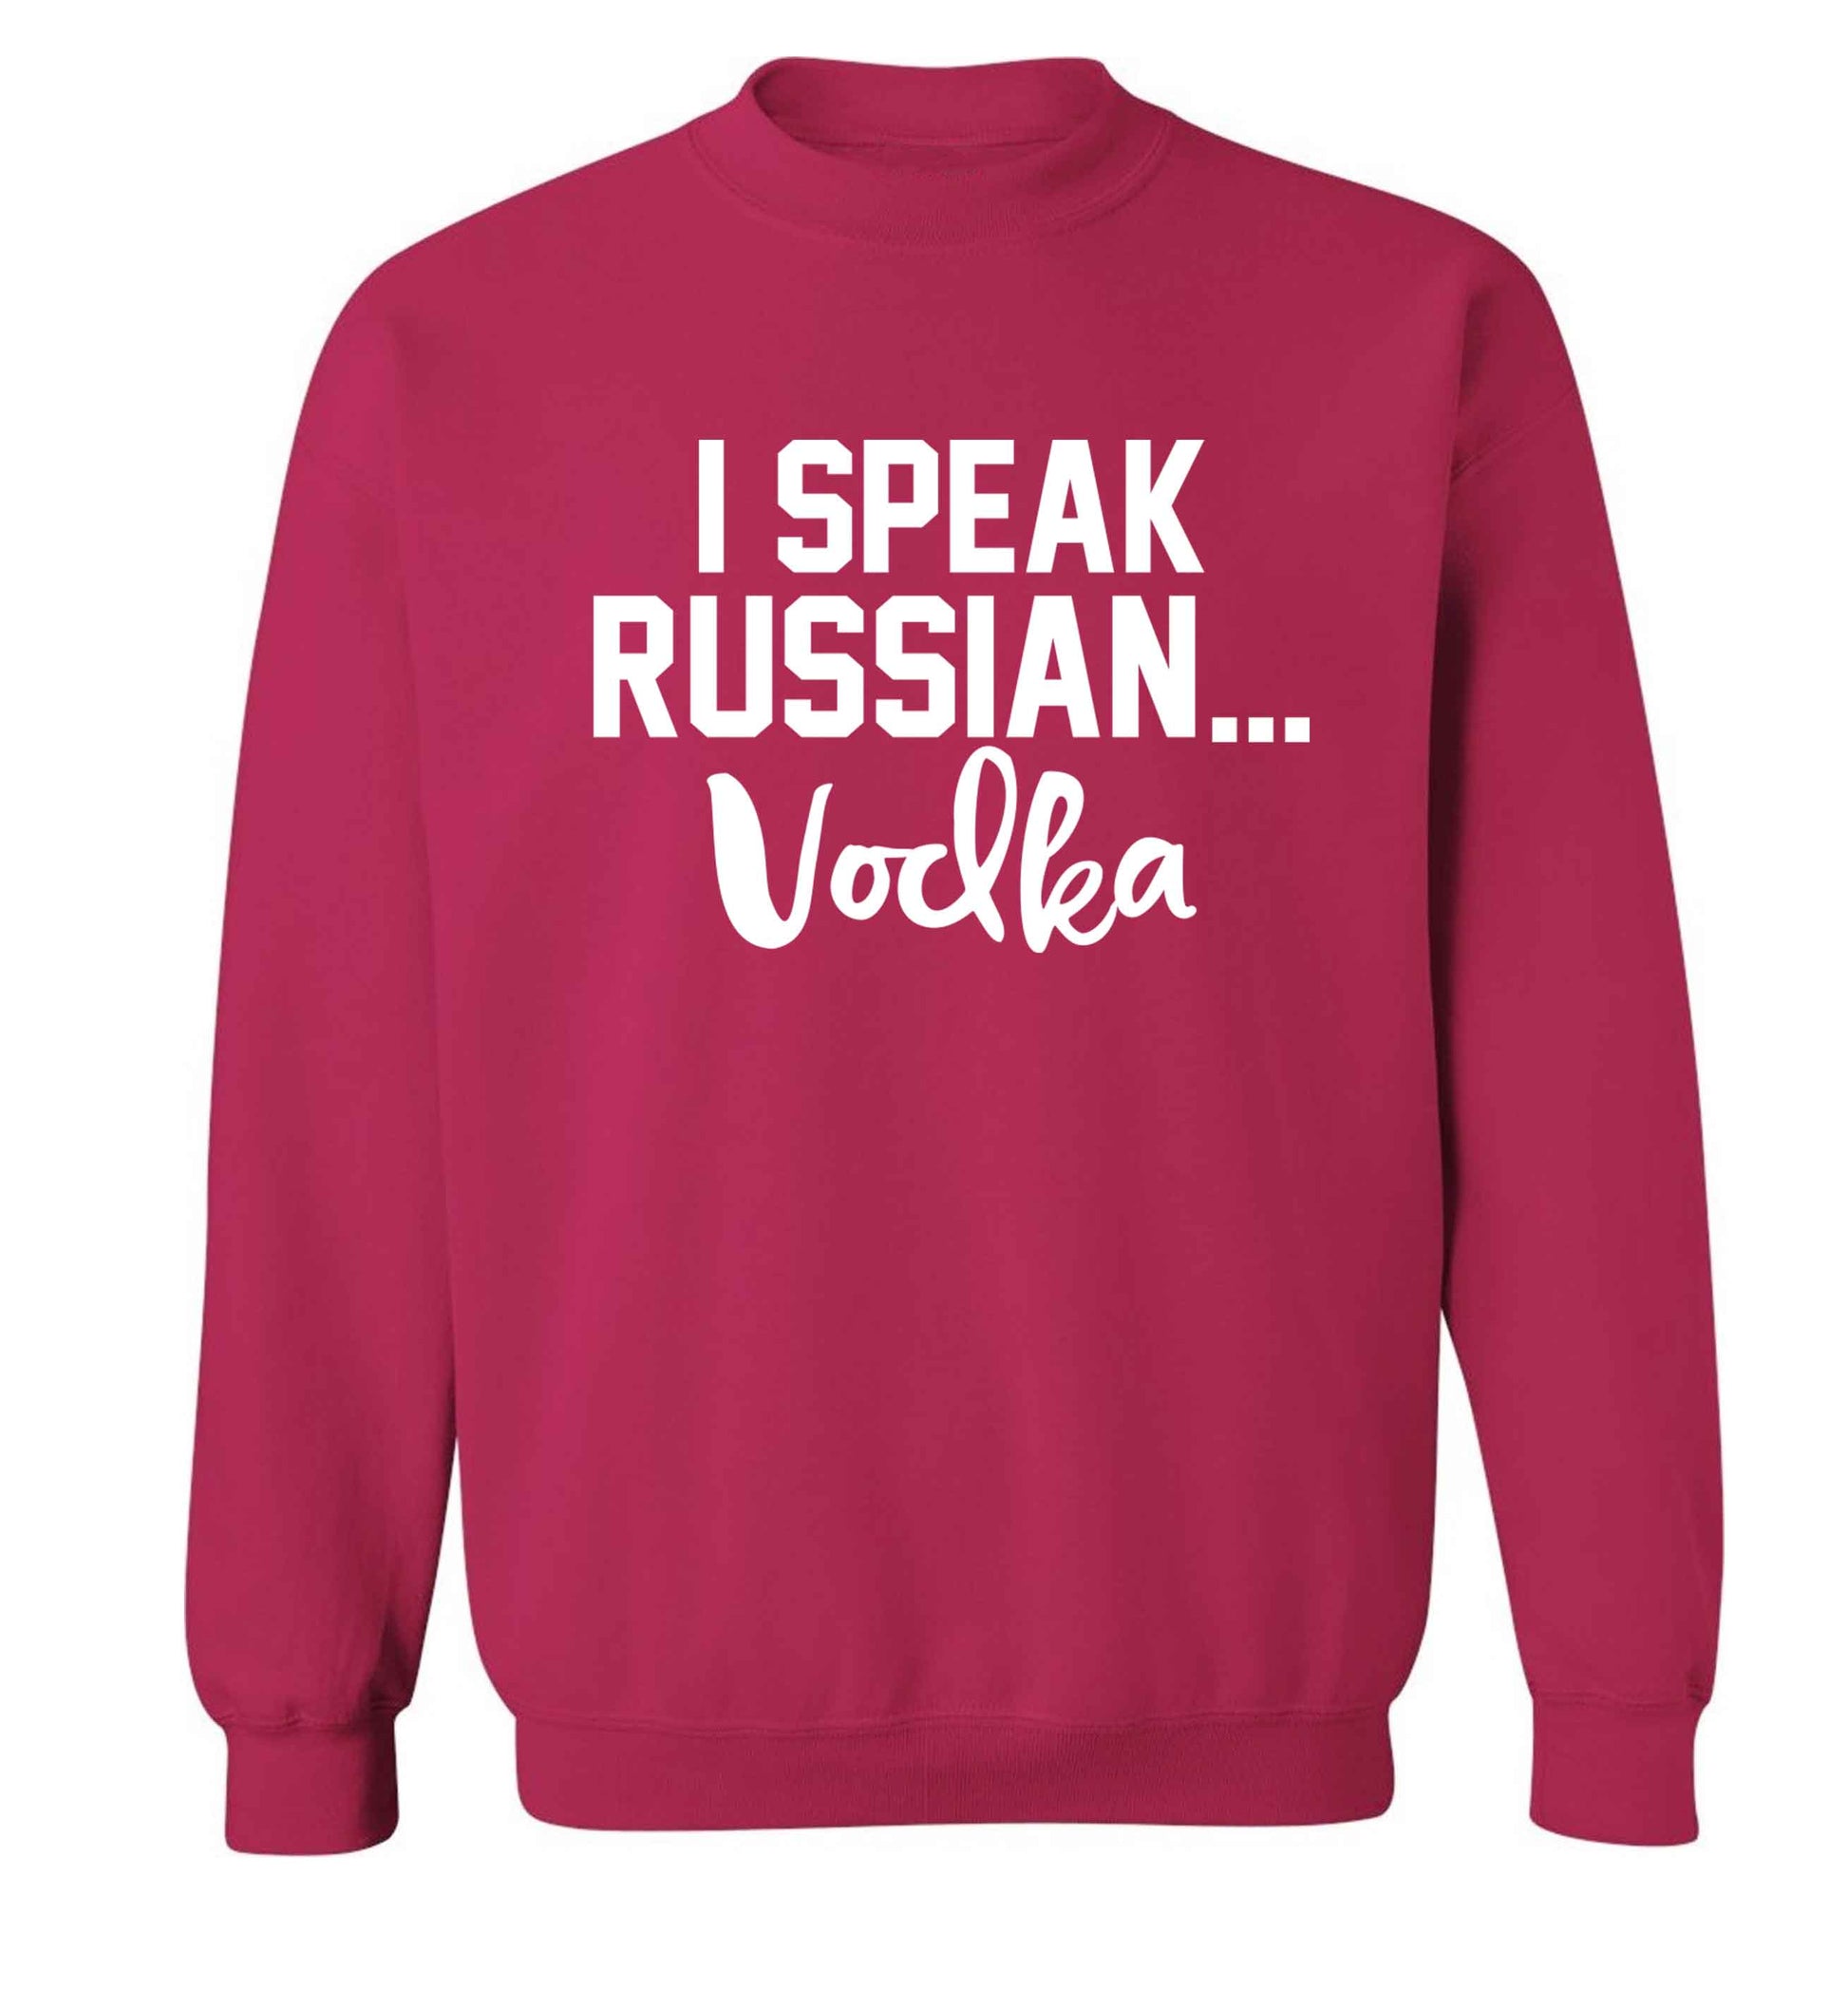 I speak russian...vodka Adult's unisex pink Sweater 2XL